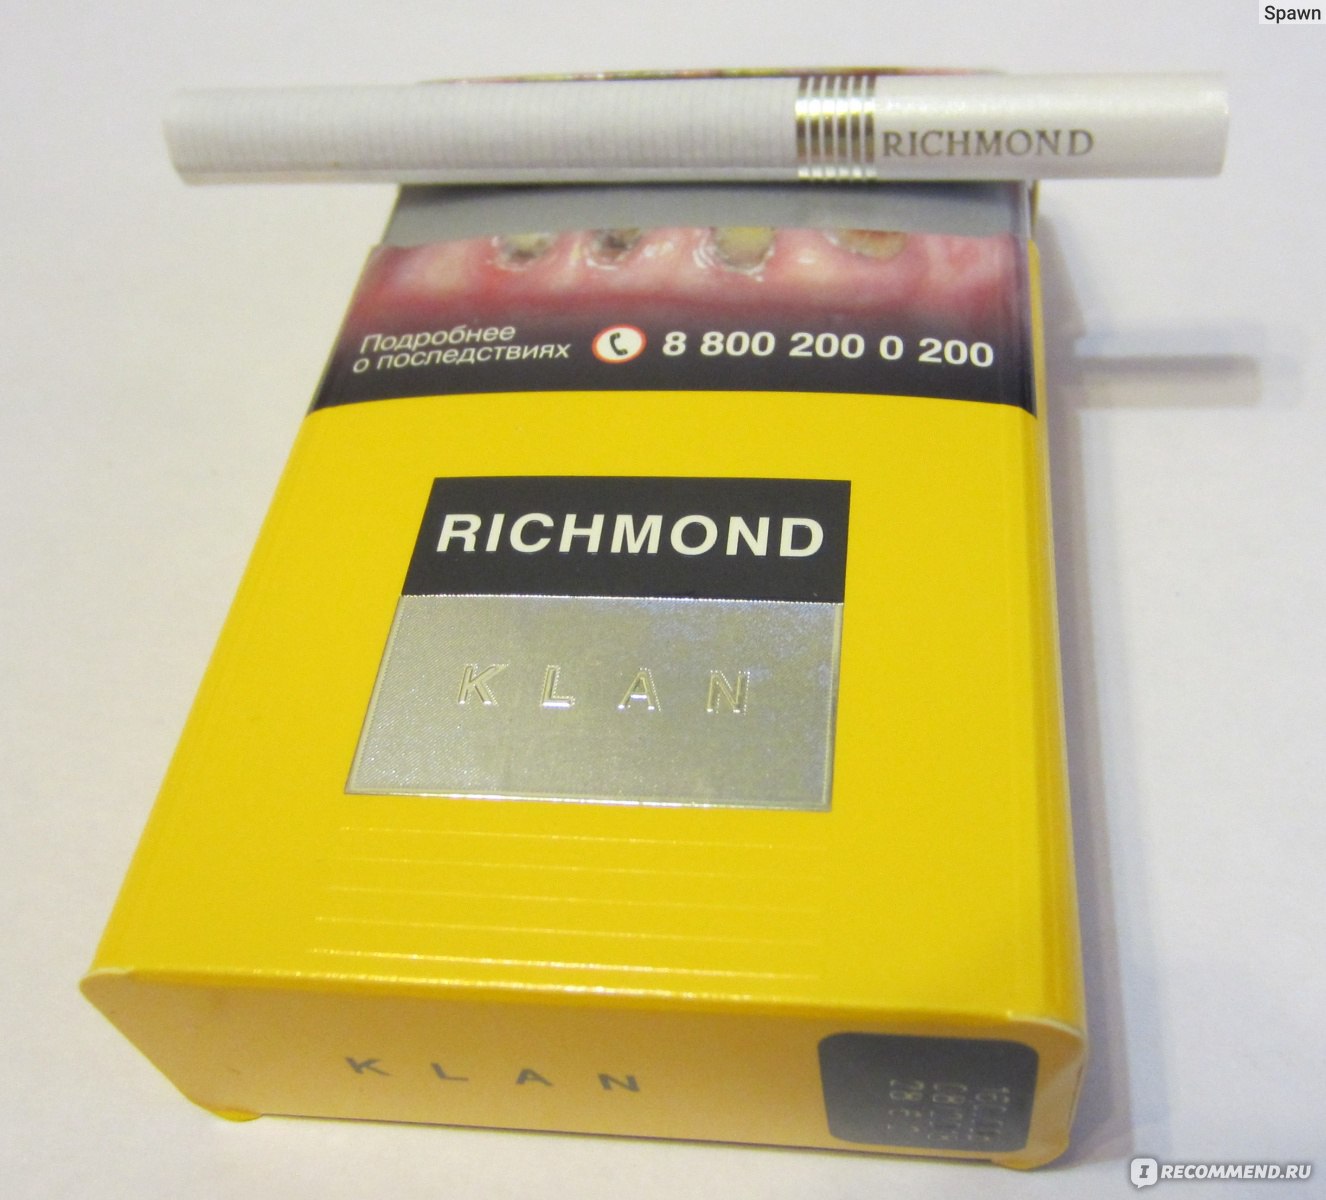 Сигареты Richmond KLAN. 